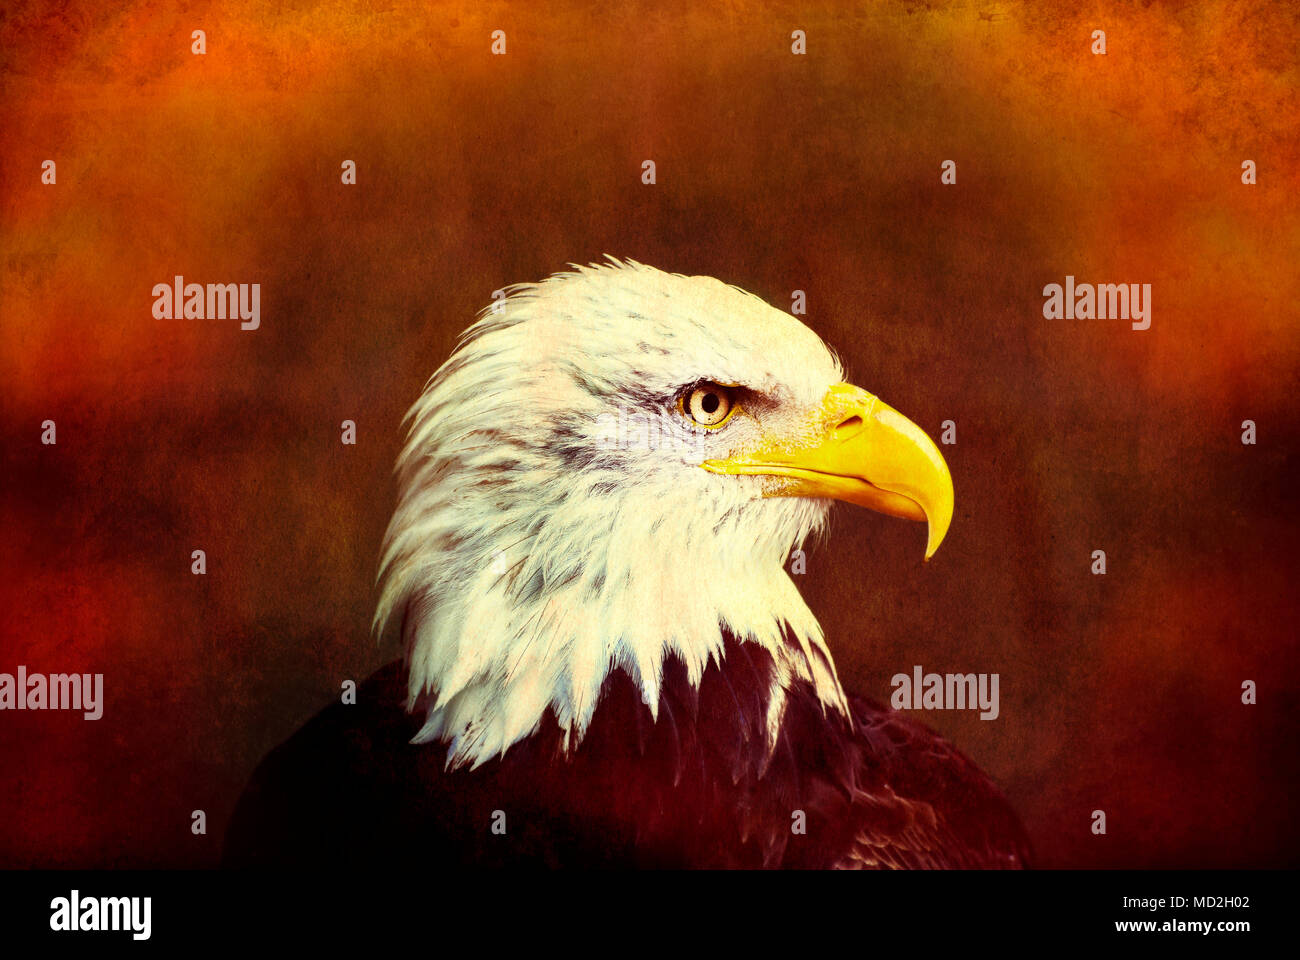 Profile of a bald eagle on grunge background. Stock Photo